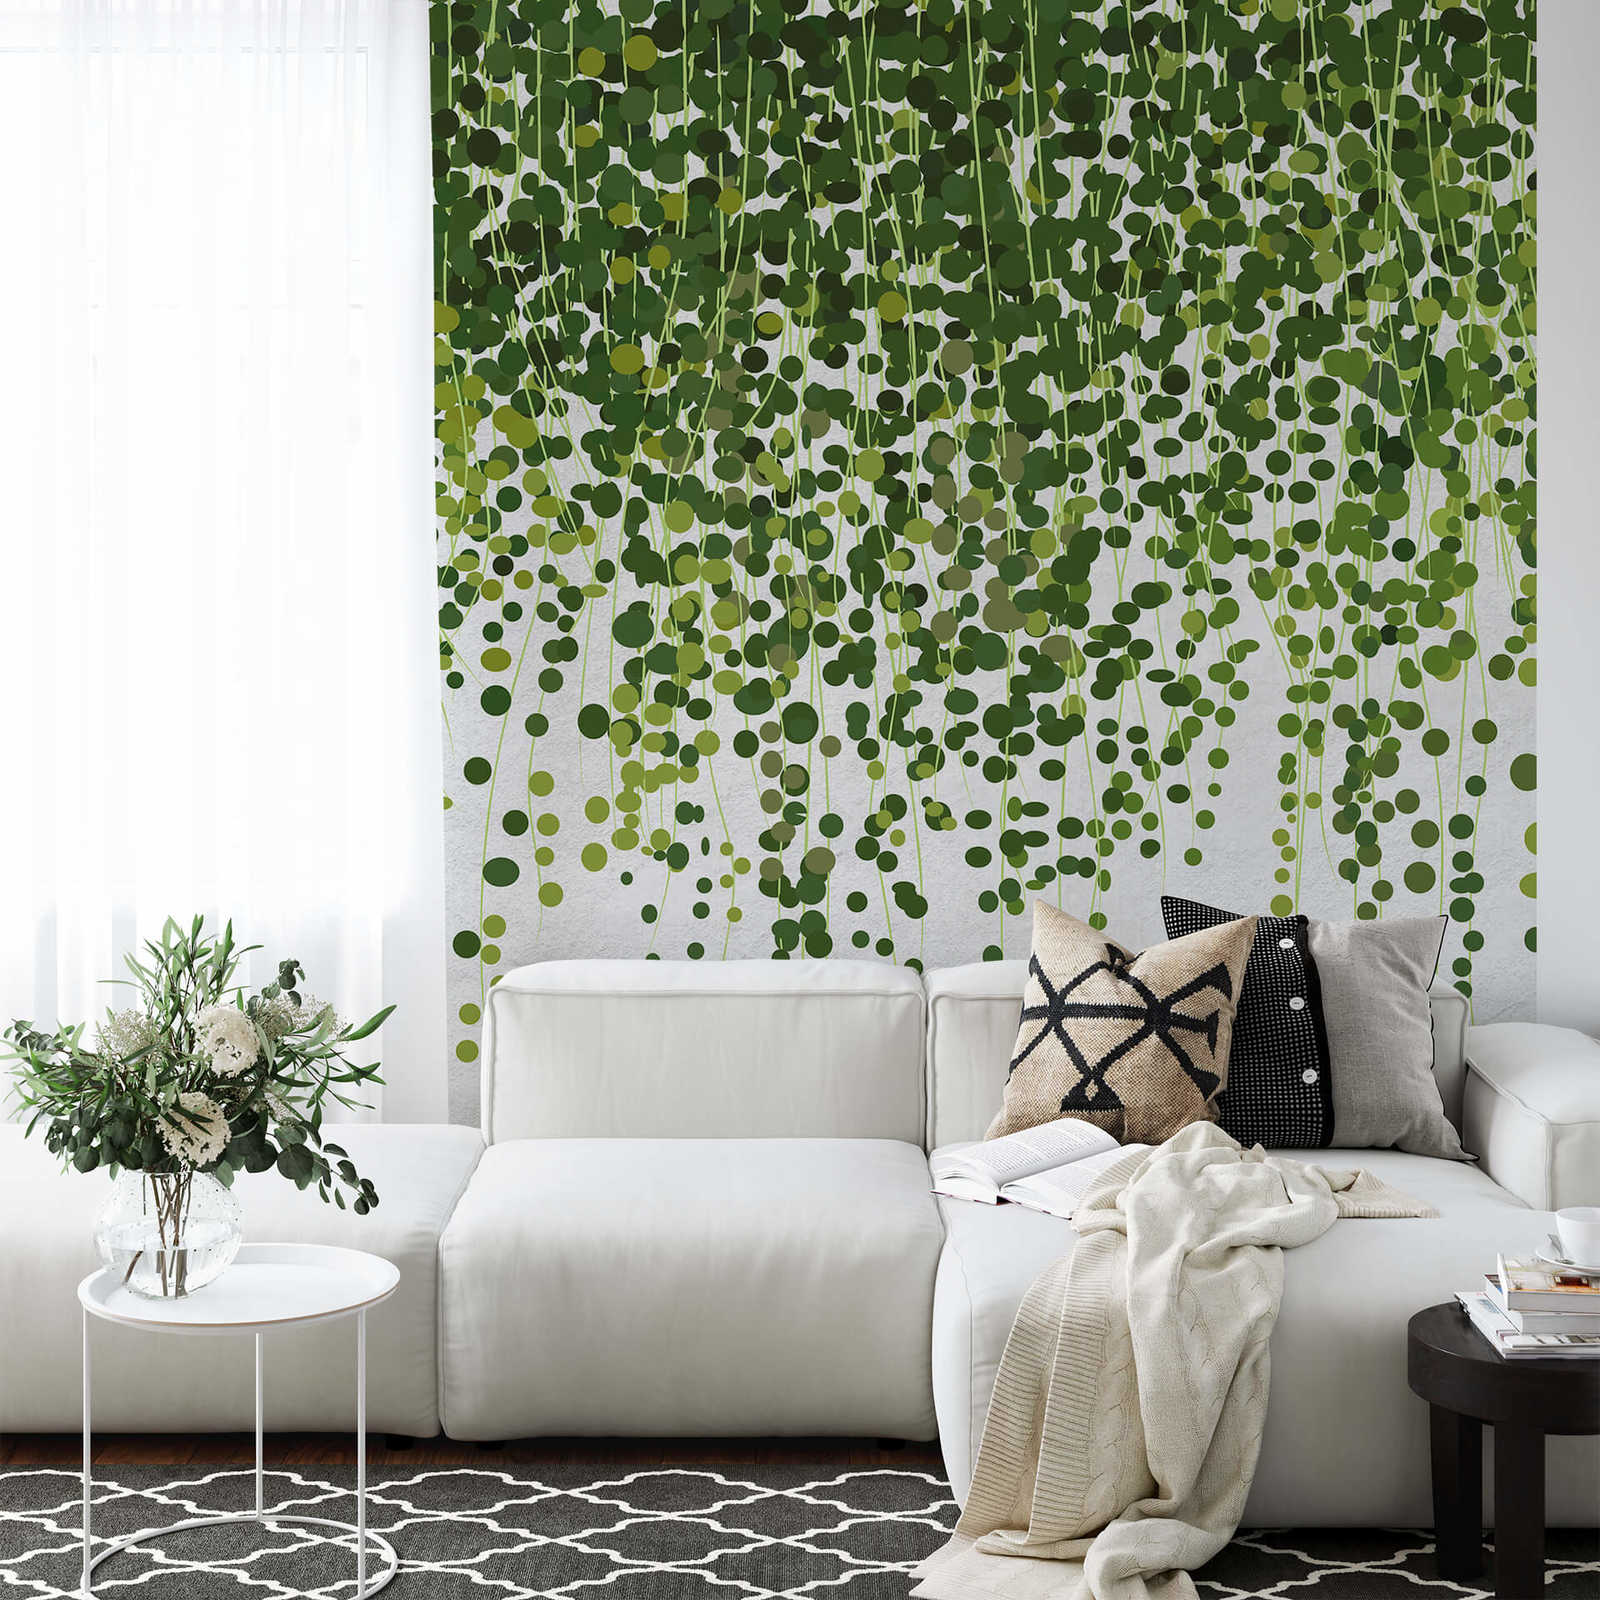             Photo wallpaper Hanging Plants - Green, Grey
        